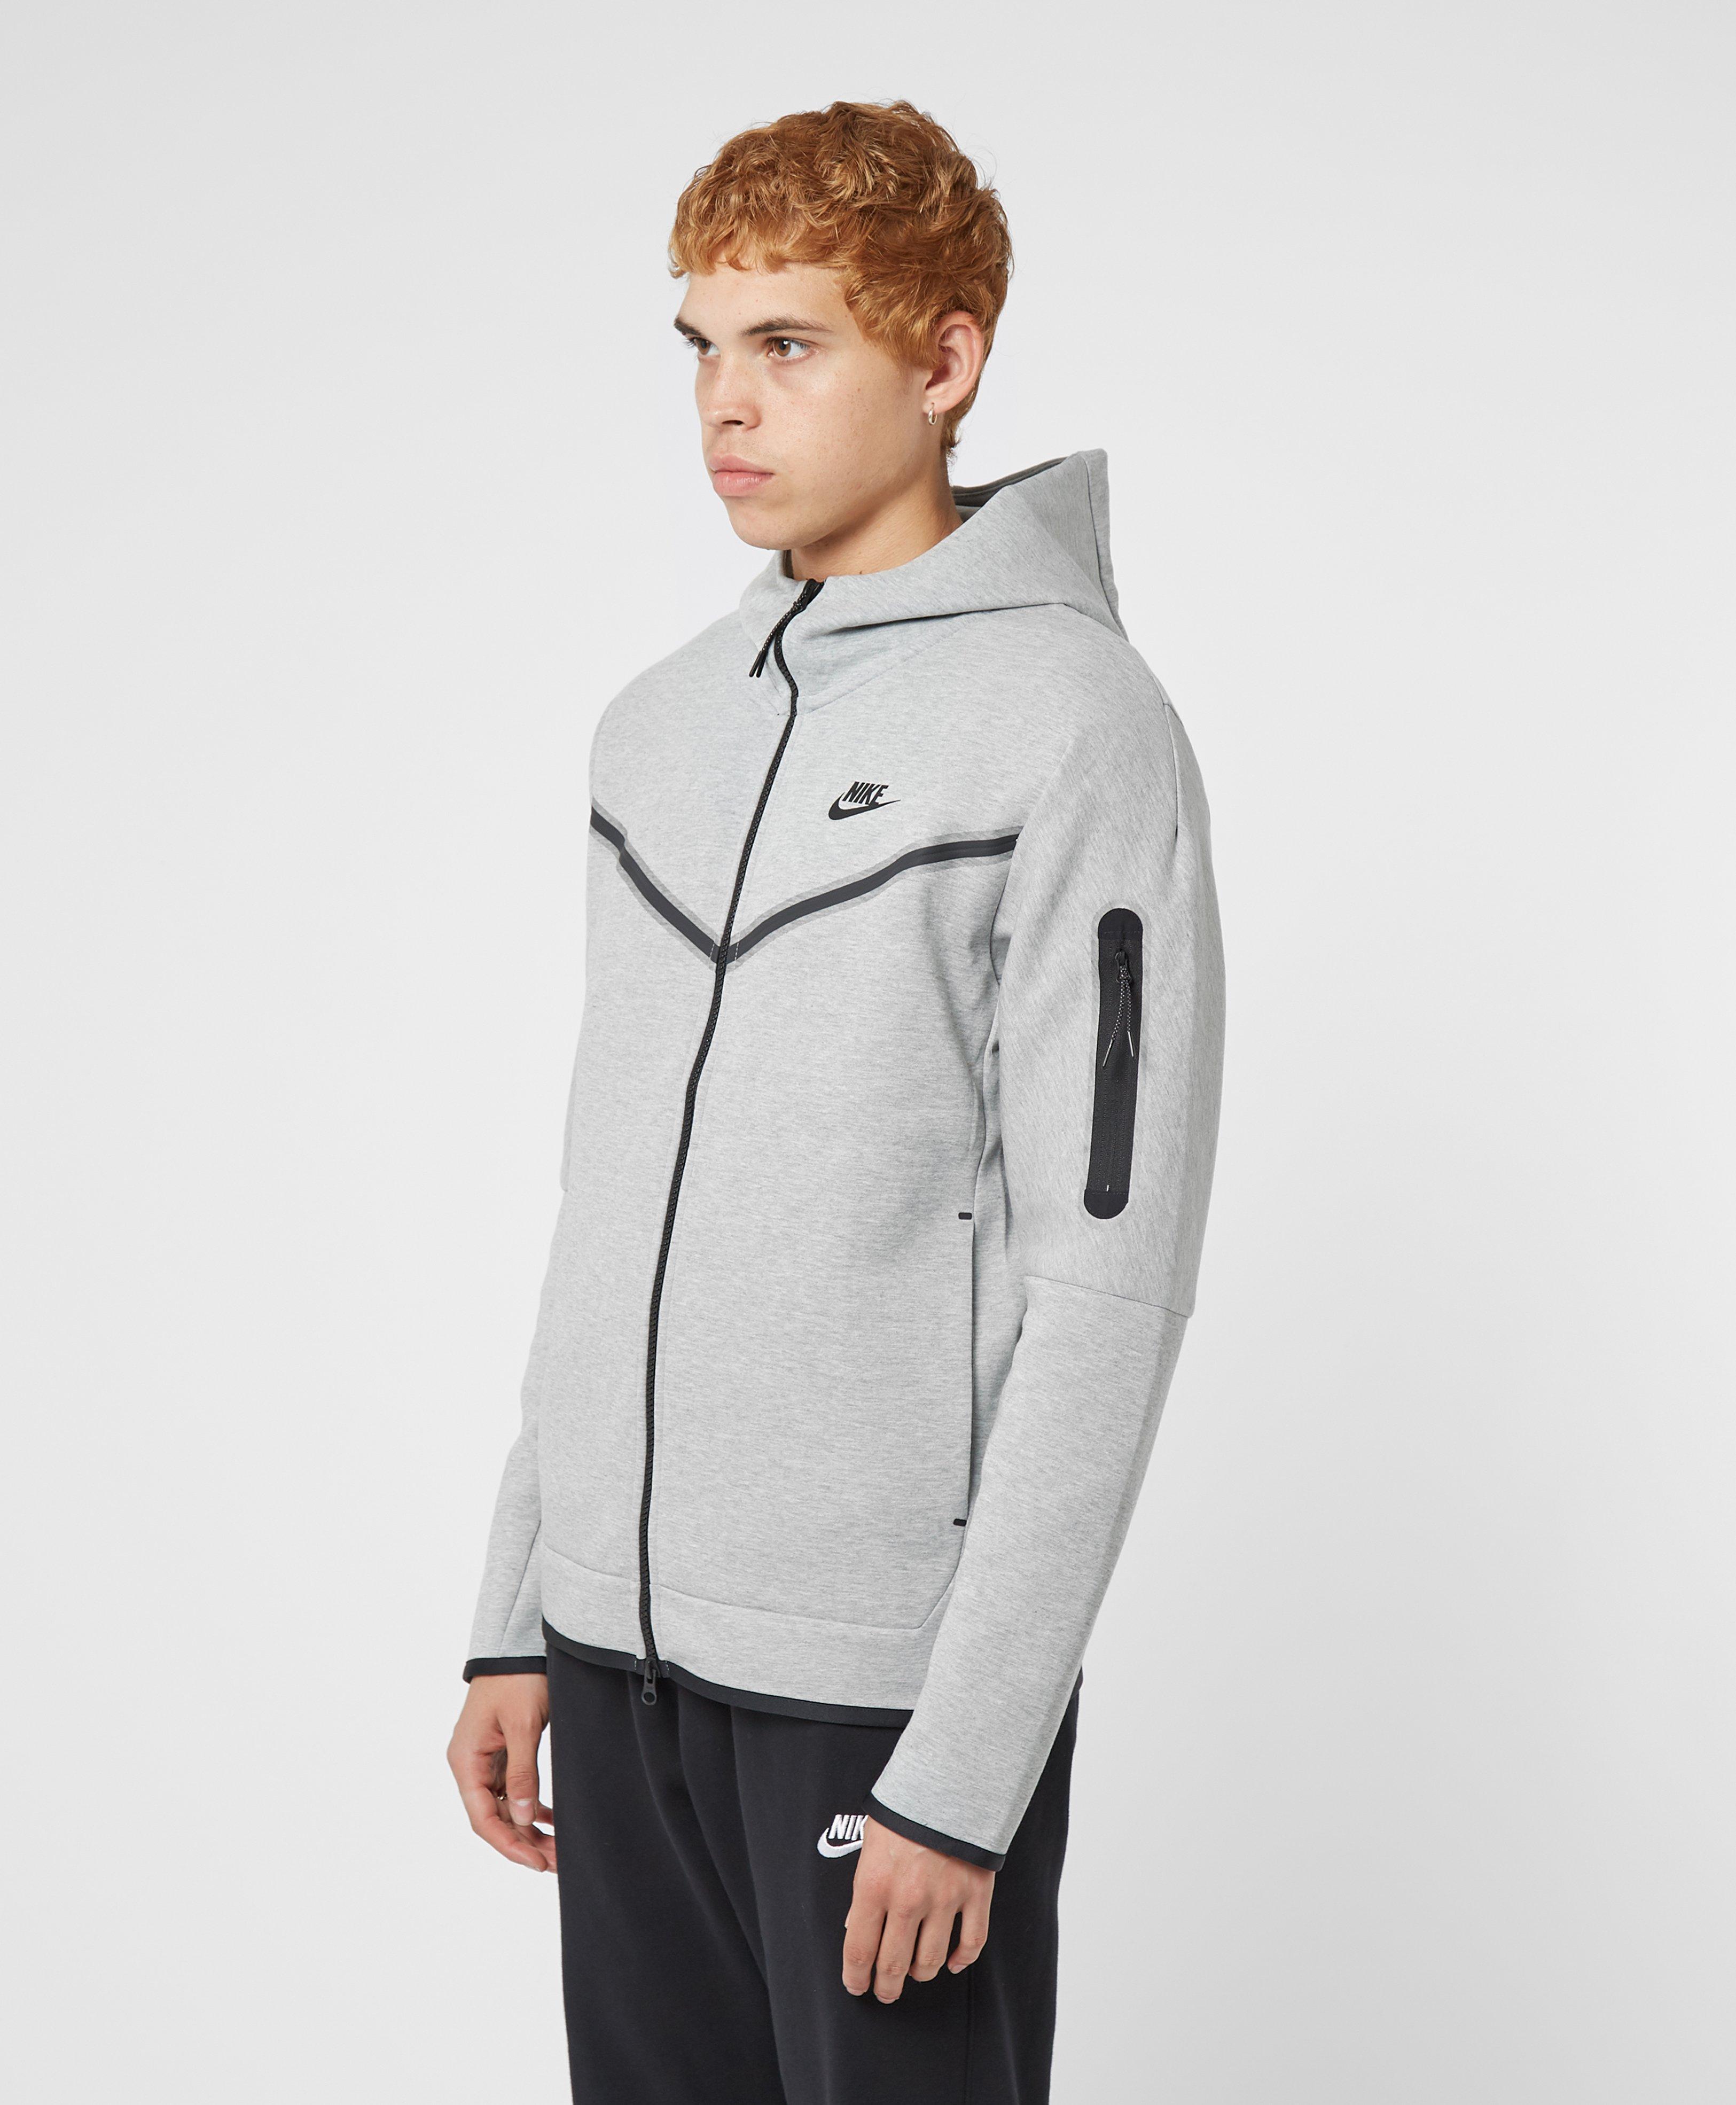 Nike Tech Fleece Full Zip Hoodie in Grey (Grey) for Men - Save 15% | Lyst  Canada